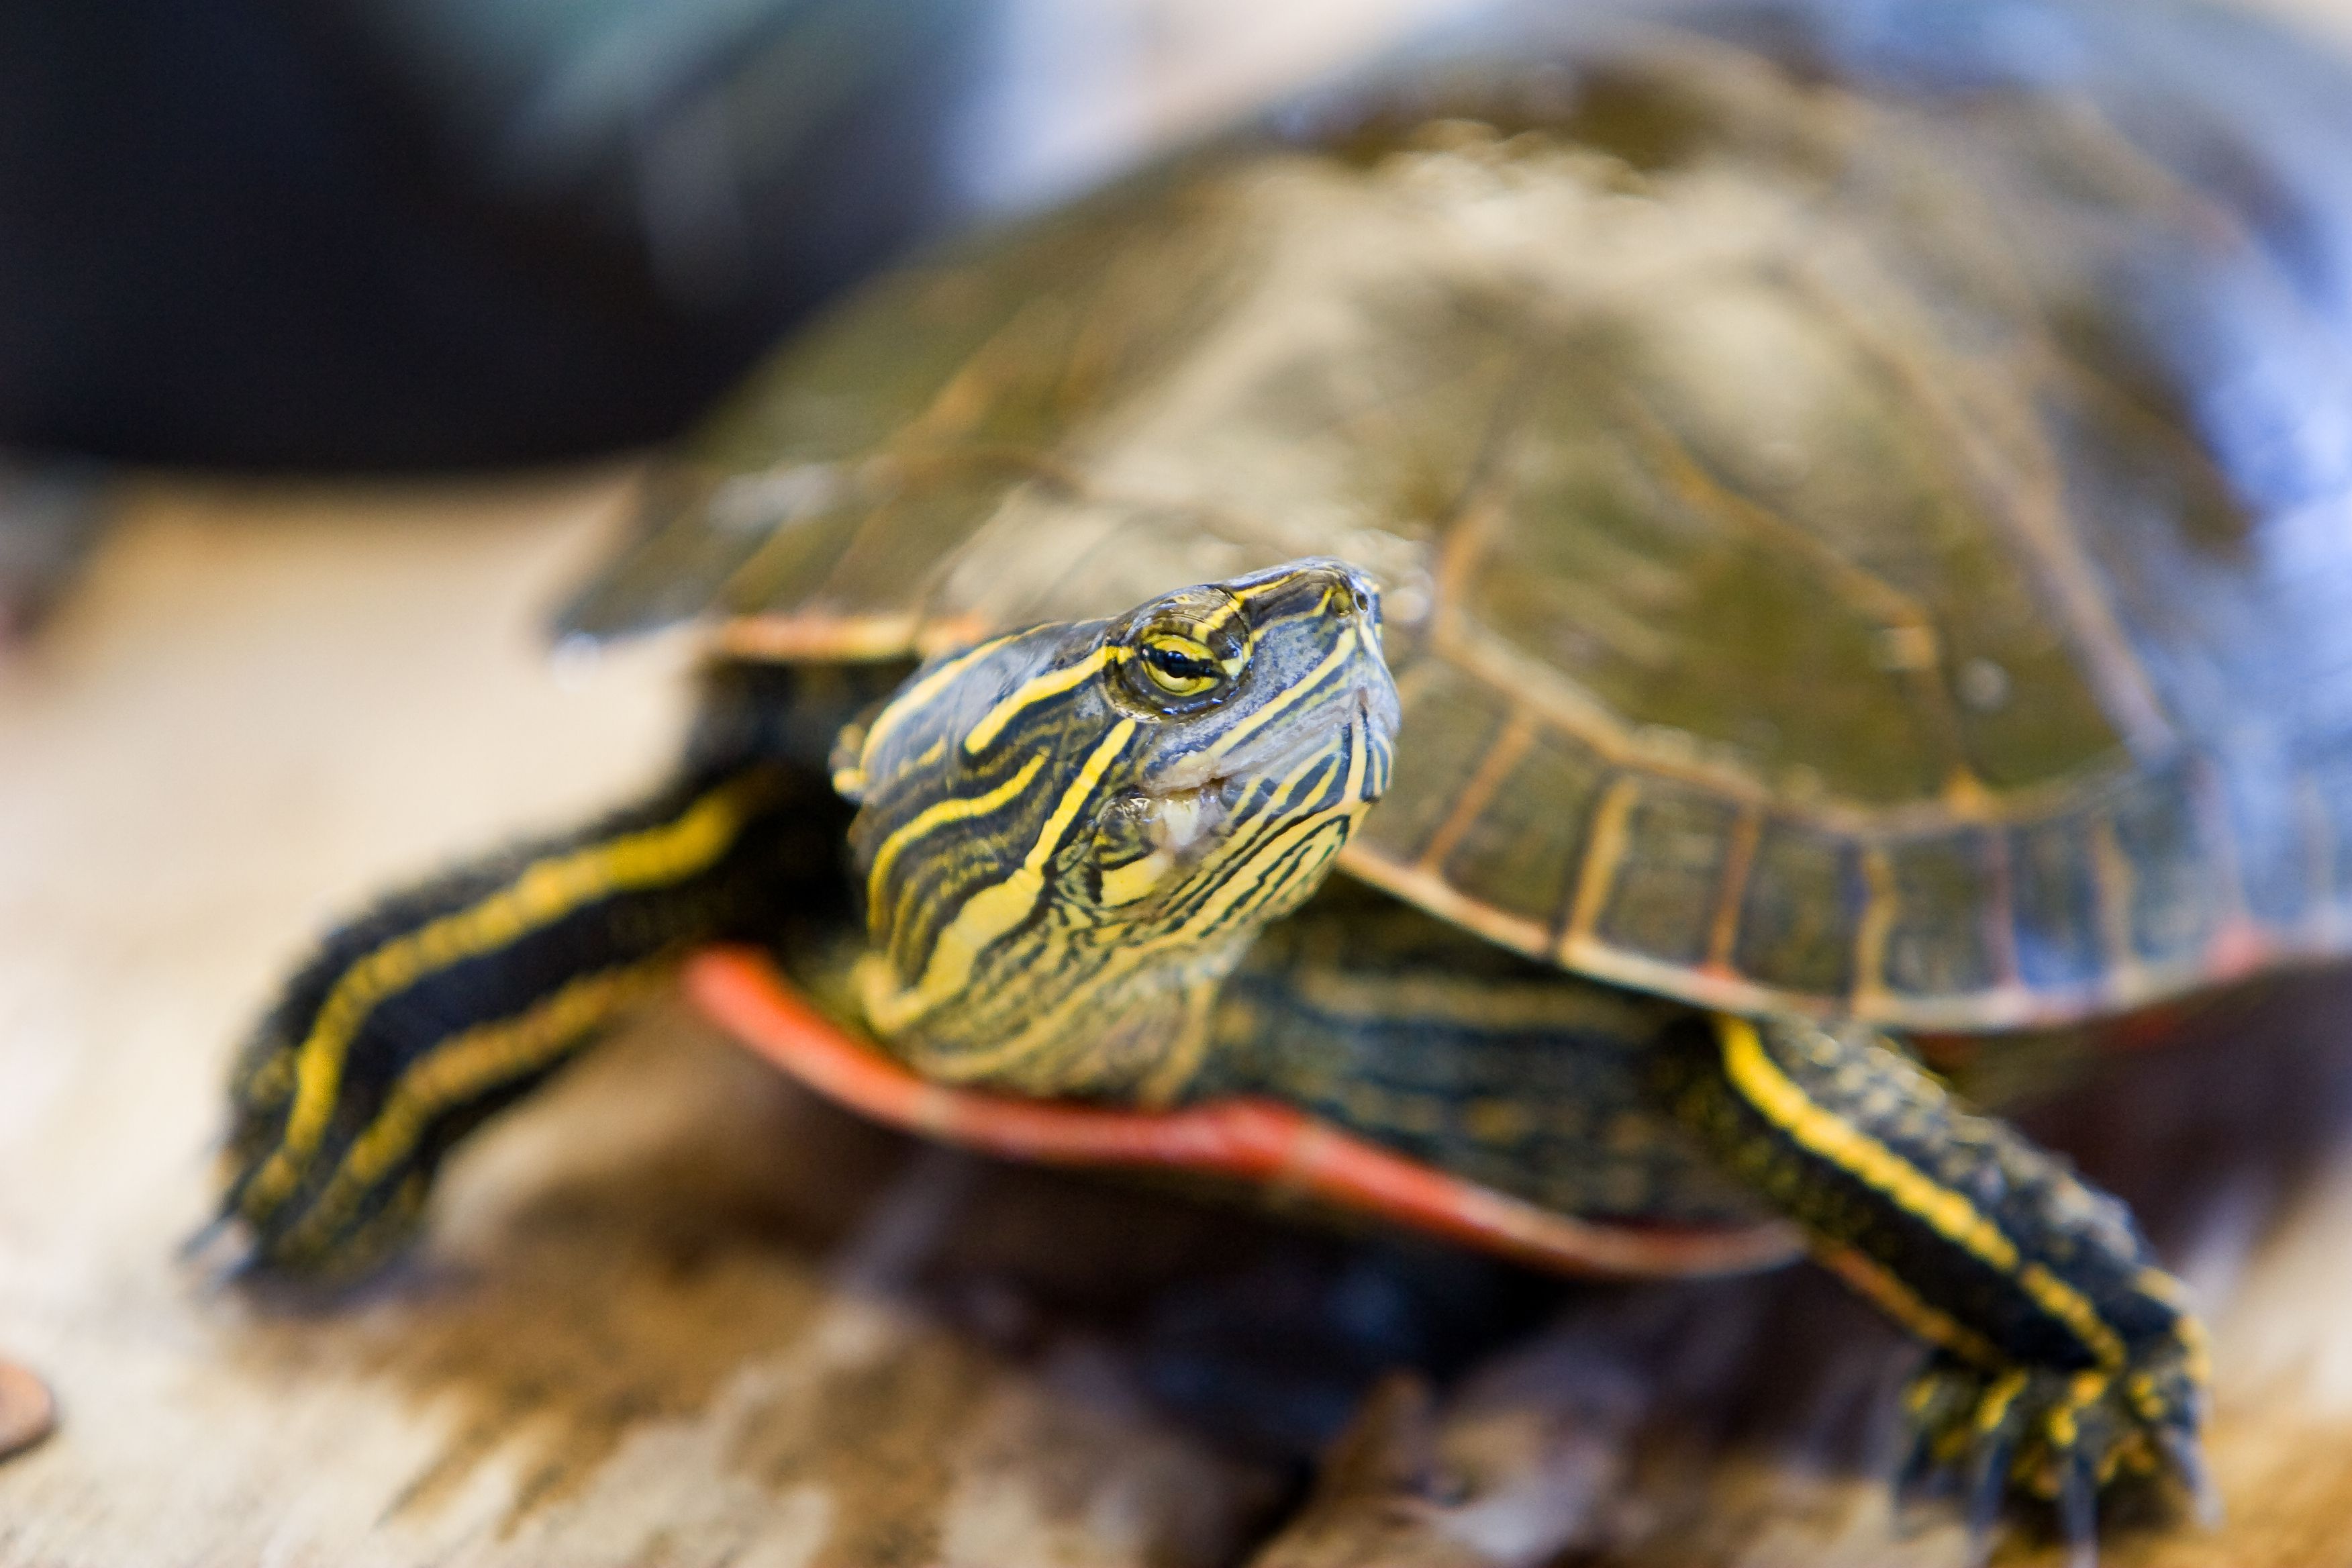 Should You Keep a Wild Turtle?